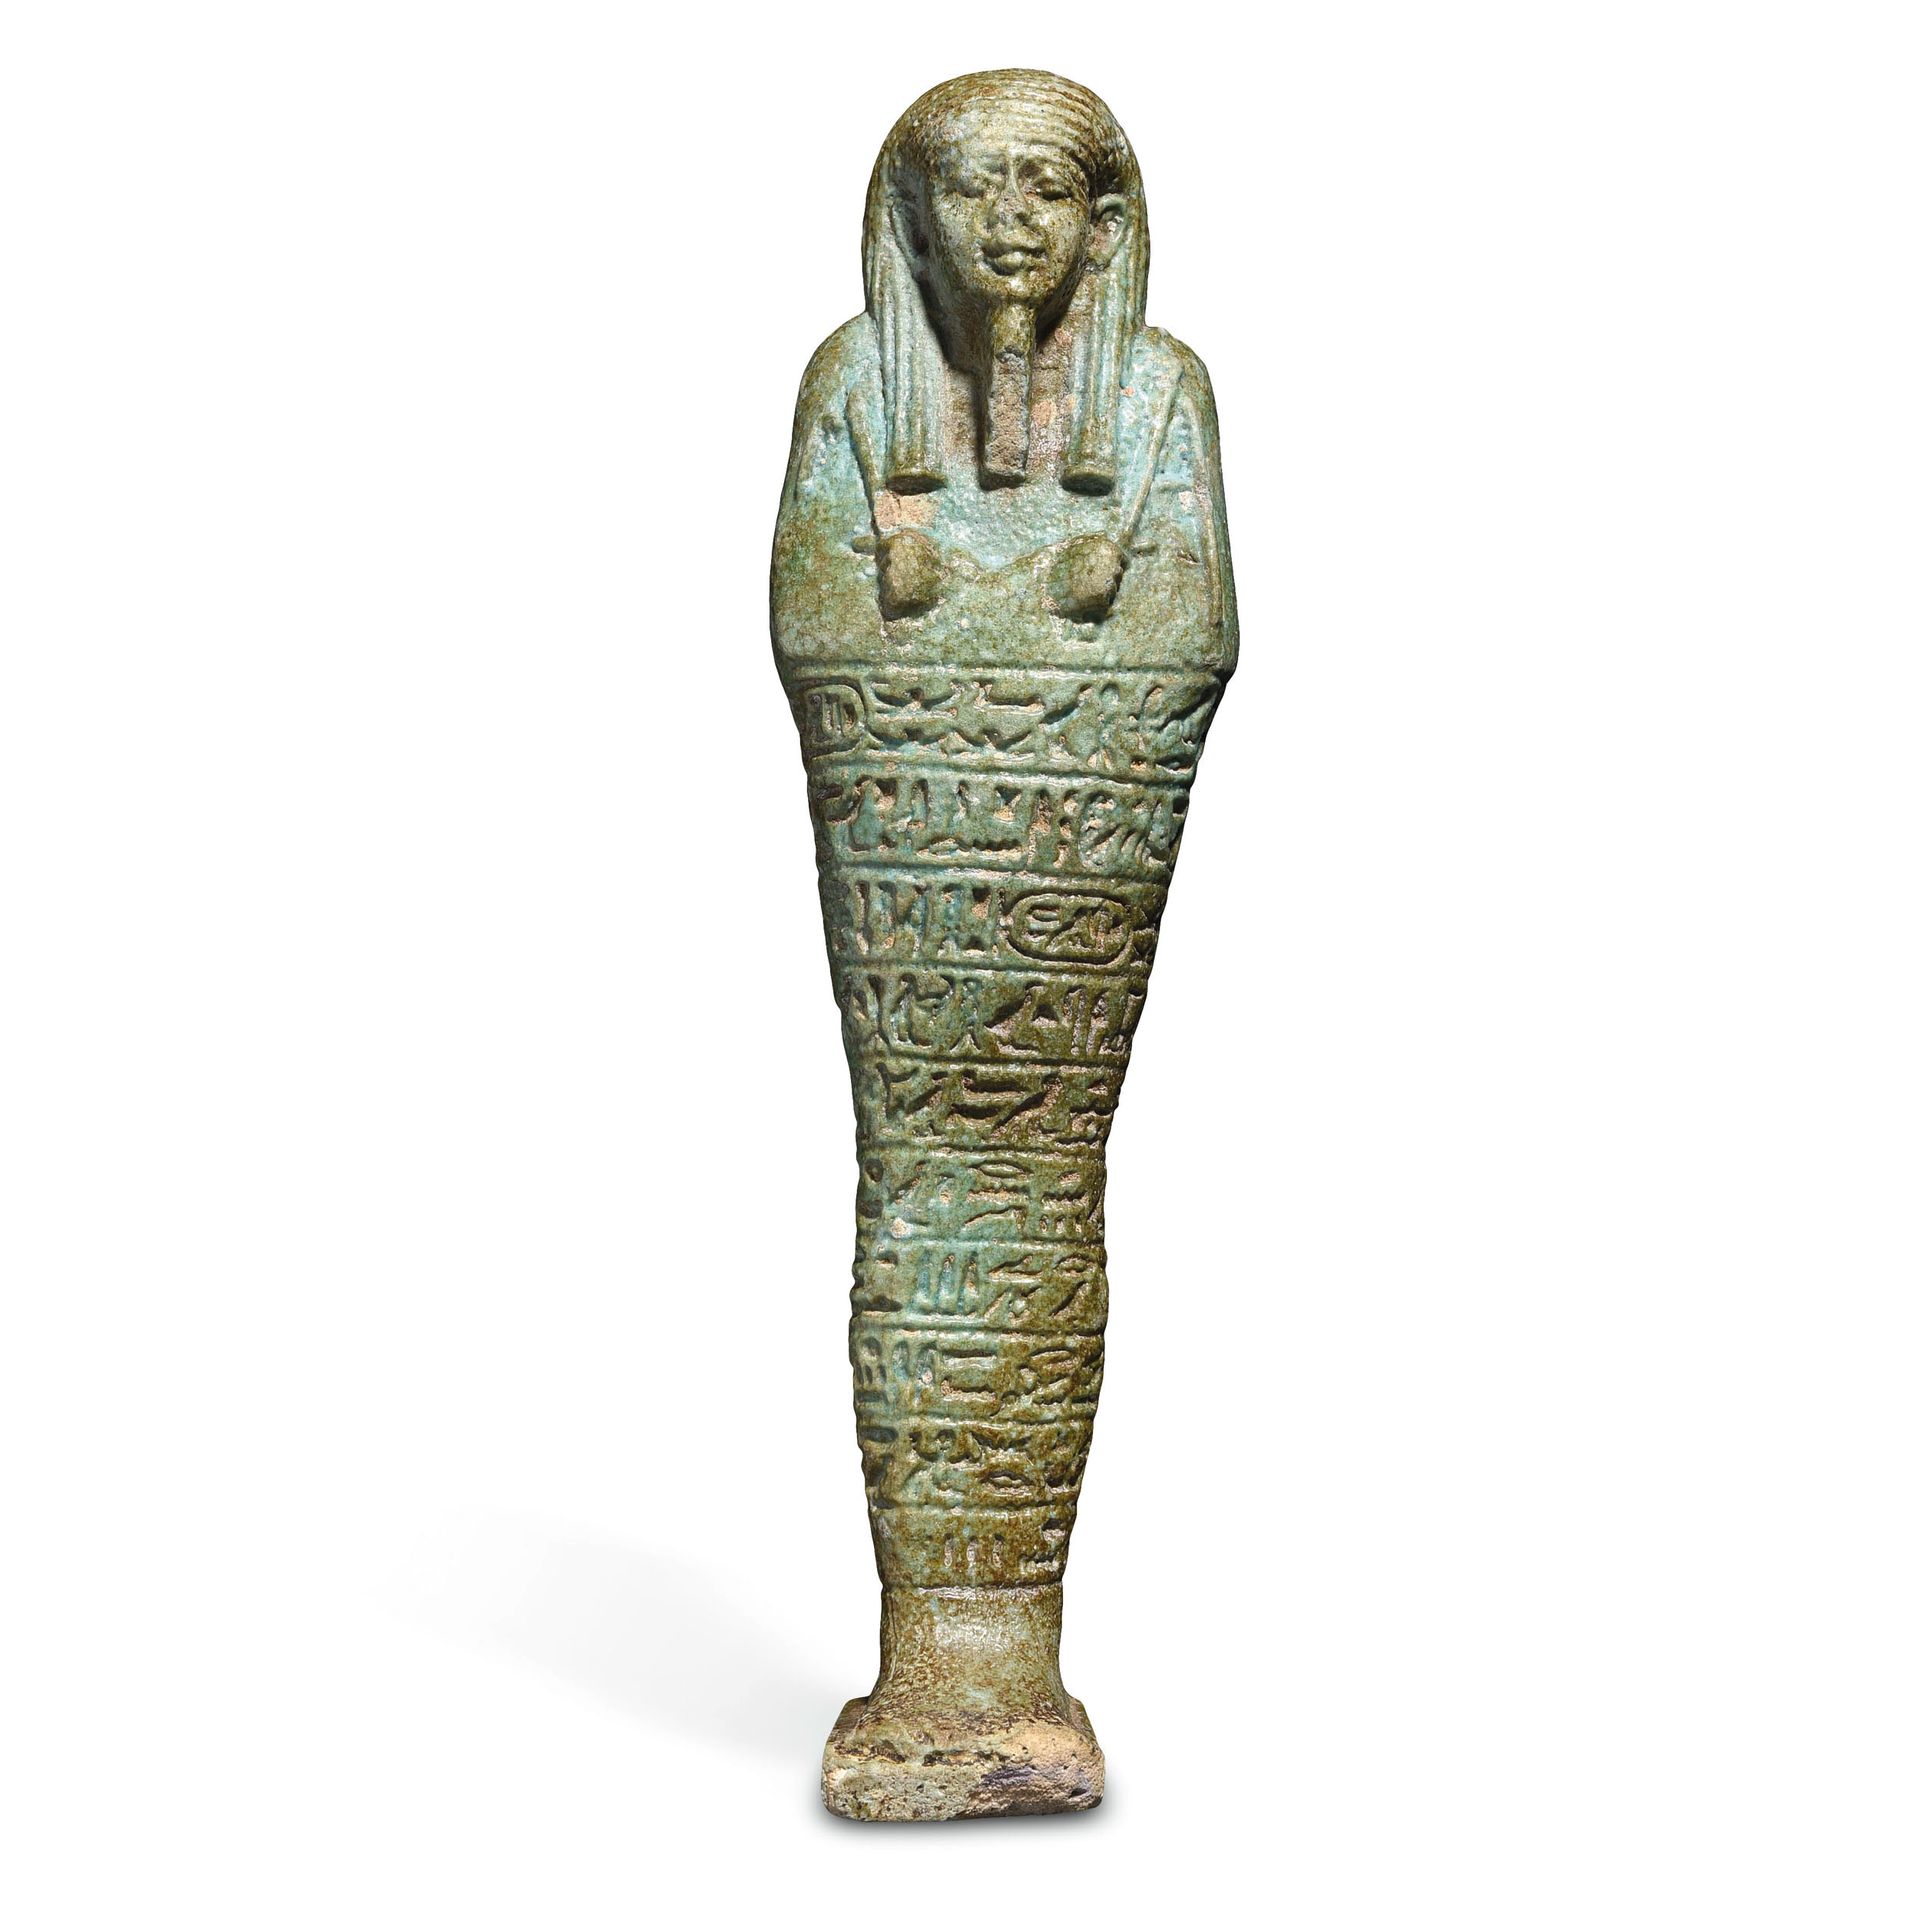 Null OUSHABTI EN NOMBRE DE PSAMETIK

Egipto, Dinastía XXVI, 664-525 a.C.

Loza v&hellip;